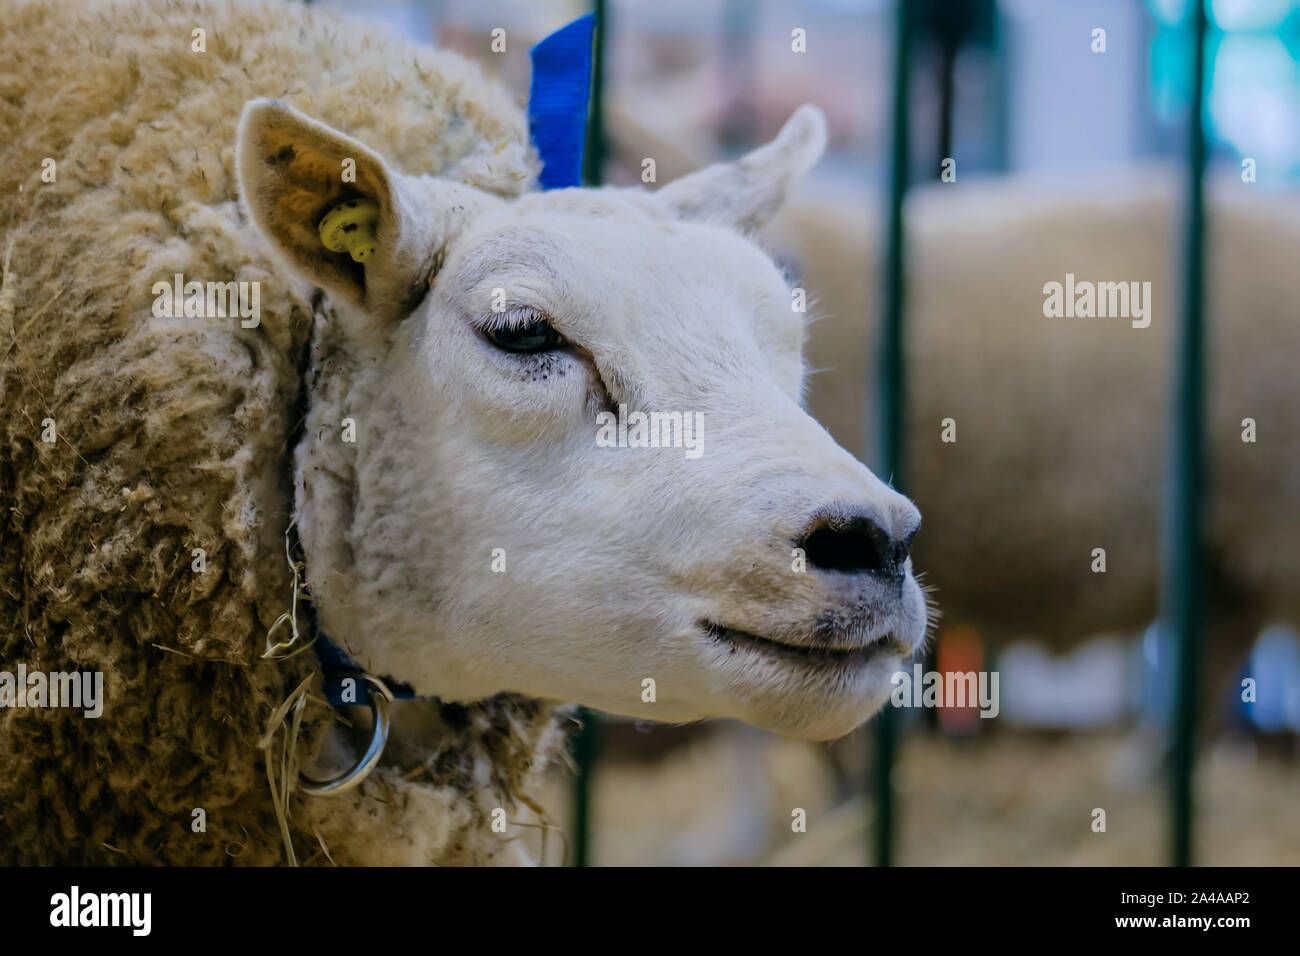 Texel sheep at animal exhibition, trade show - close up Stock Photo